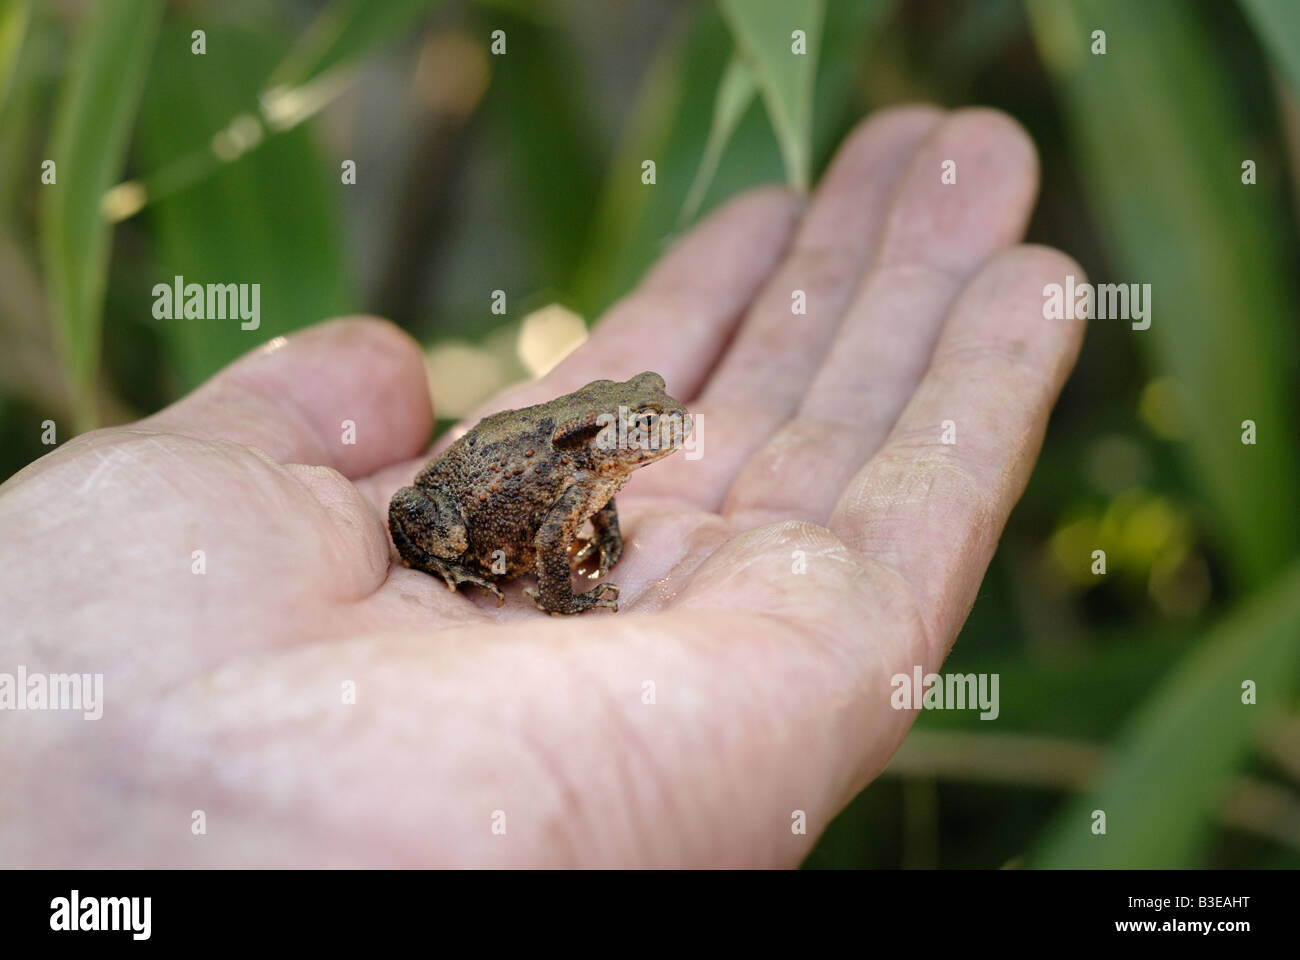 Juvenile Common Garden Toad Bufo bufo on human hand,Surrey,England Stock Photo